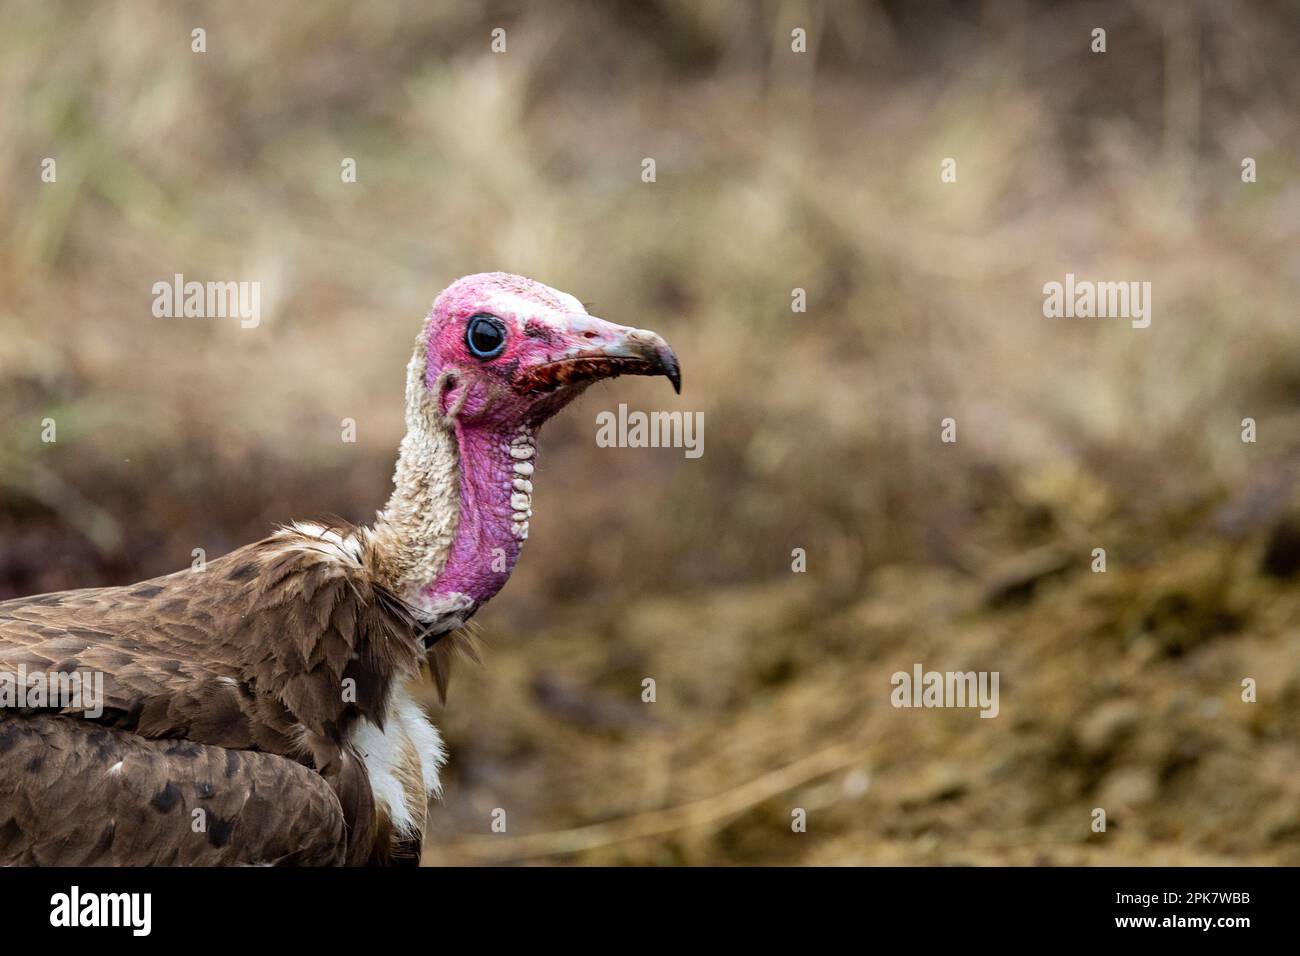 Close-up portrait of a Hooded Vulture, Necrosyrtes monachus. Stock Photo